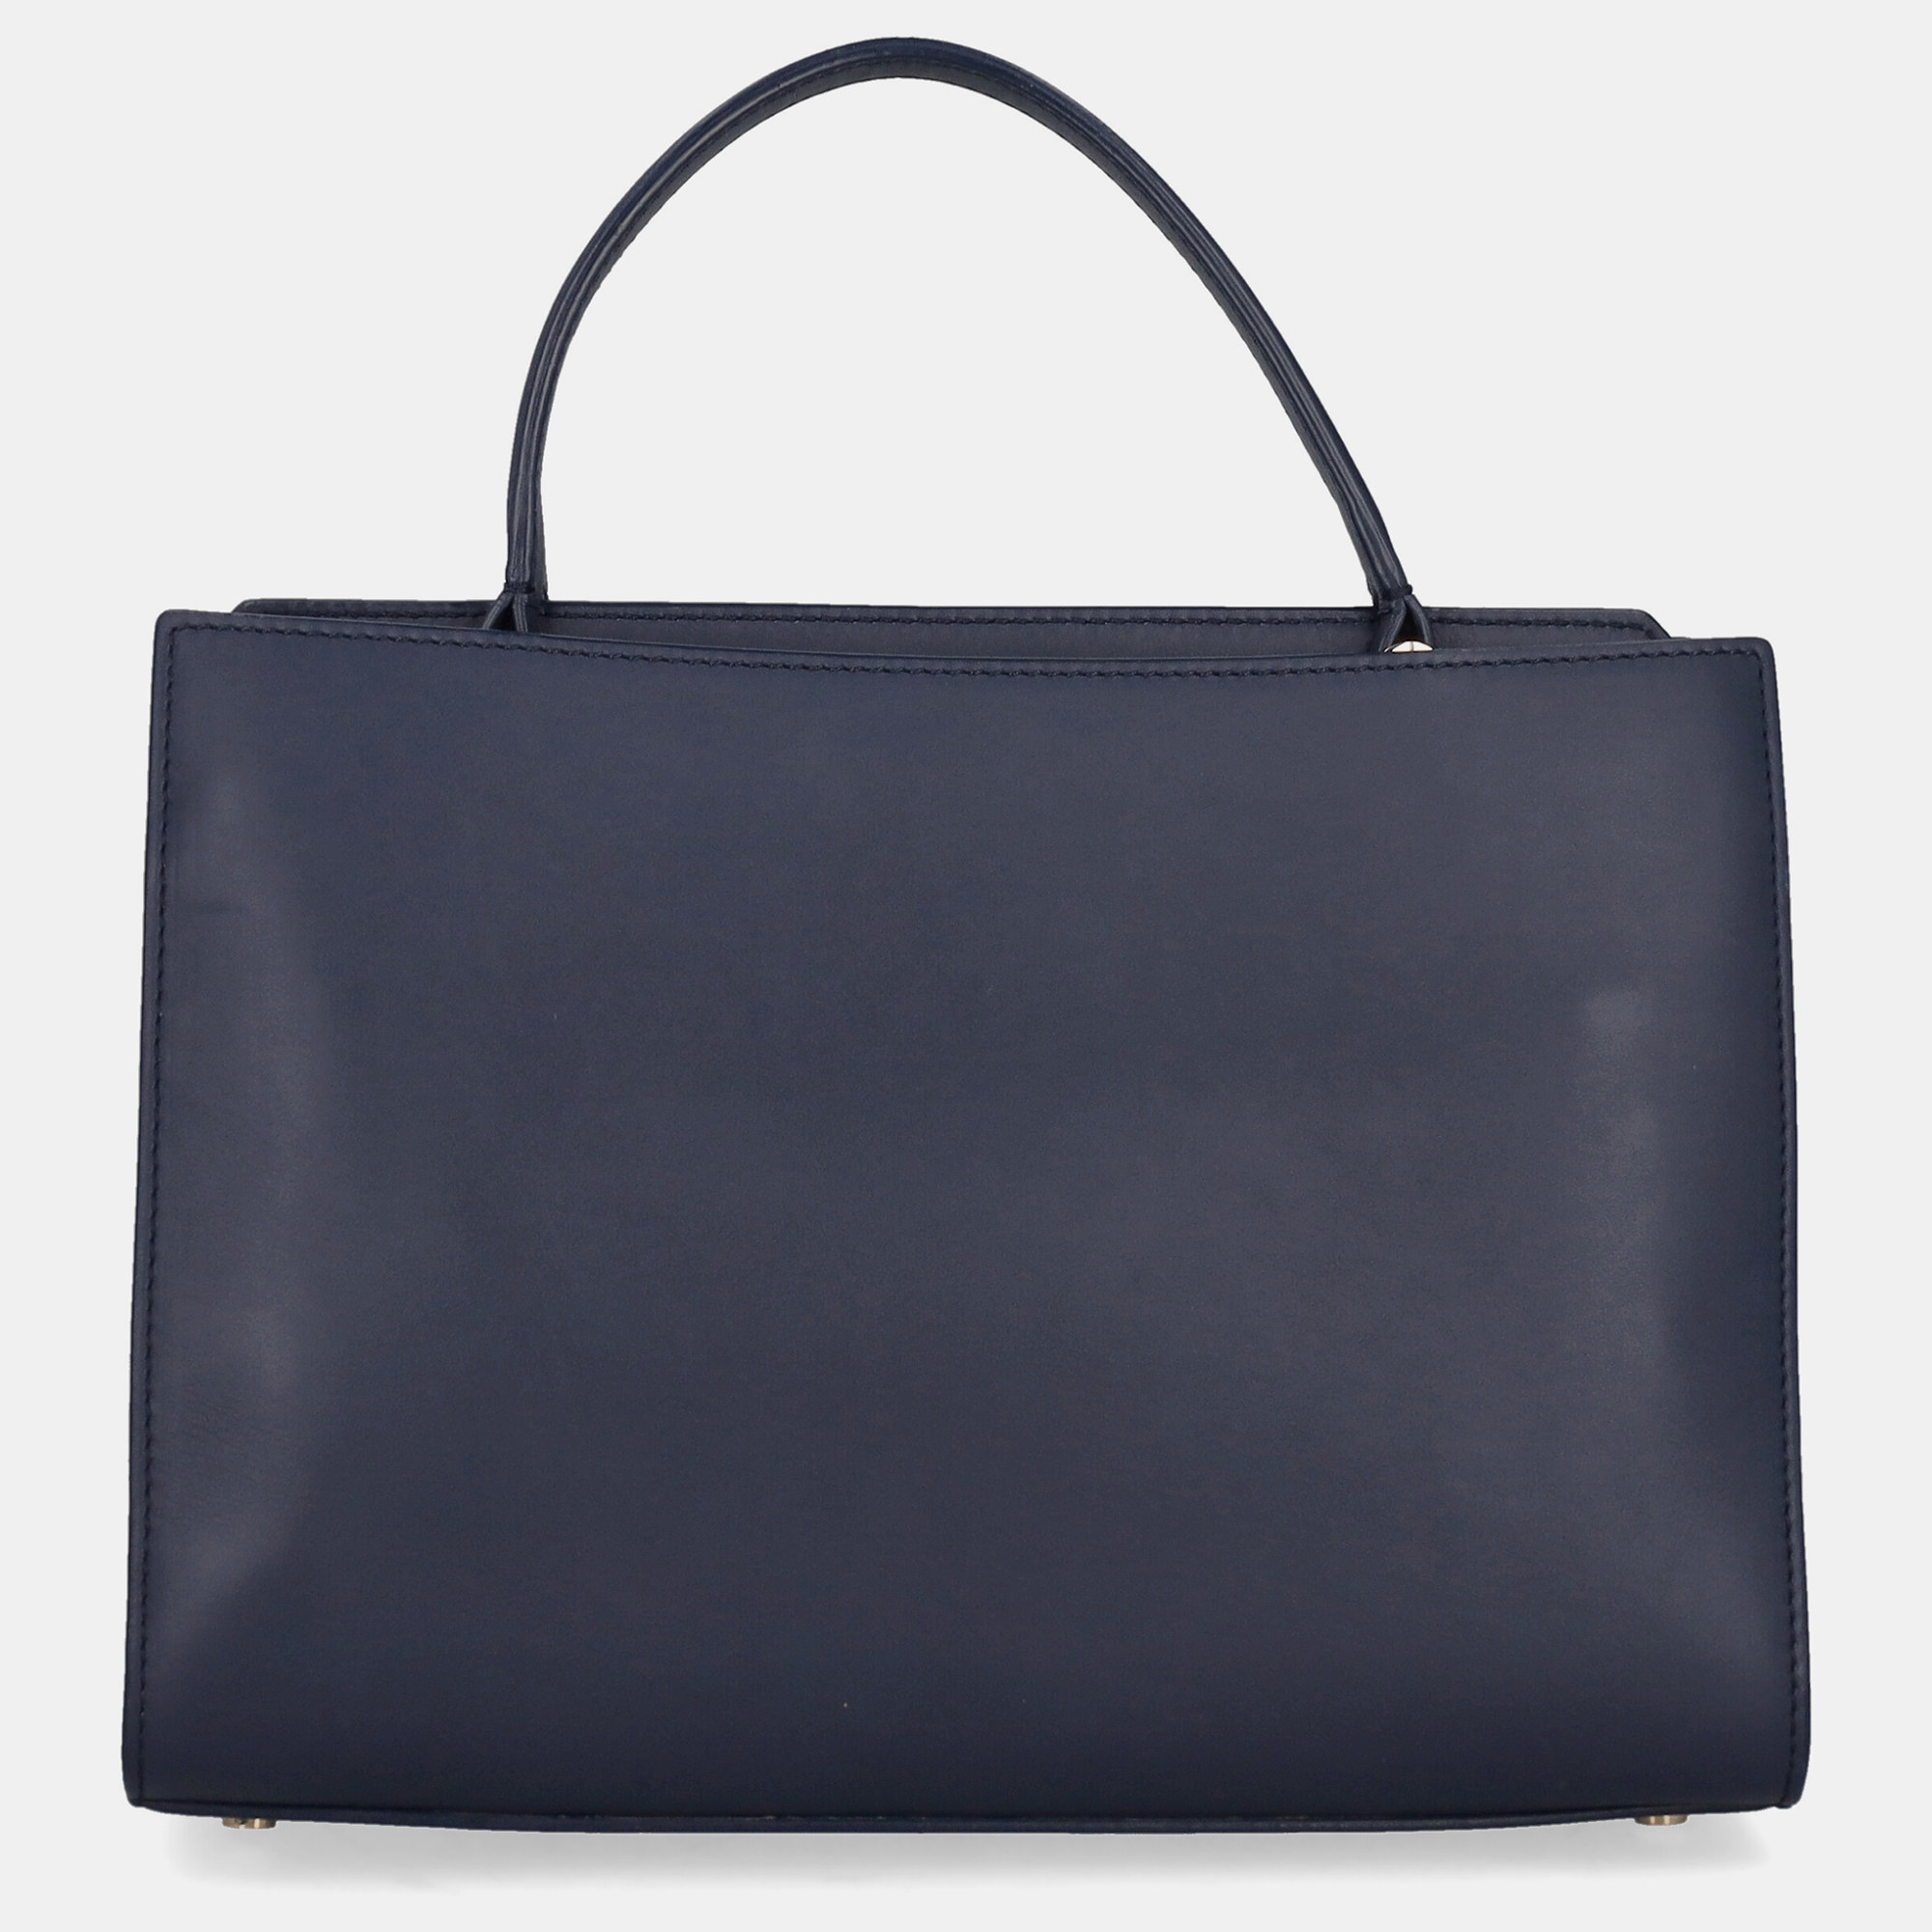 Loro Piana  Women's Leather Tote Bag - Grey - One Size